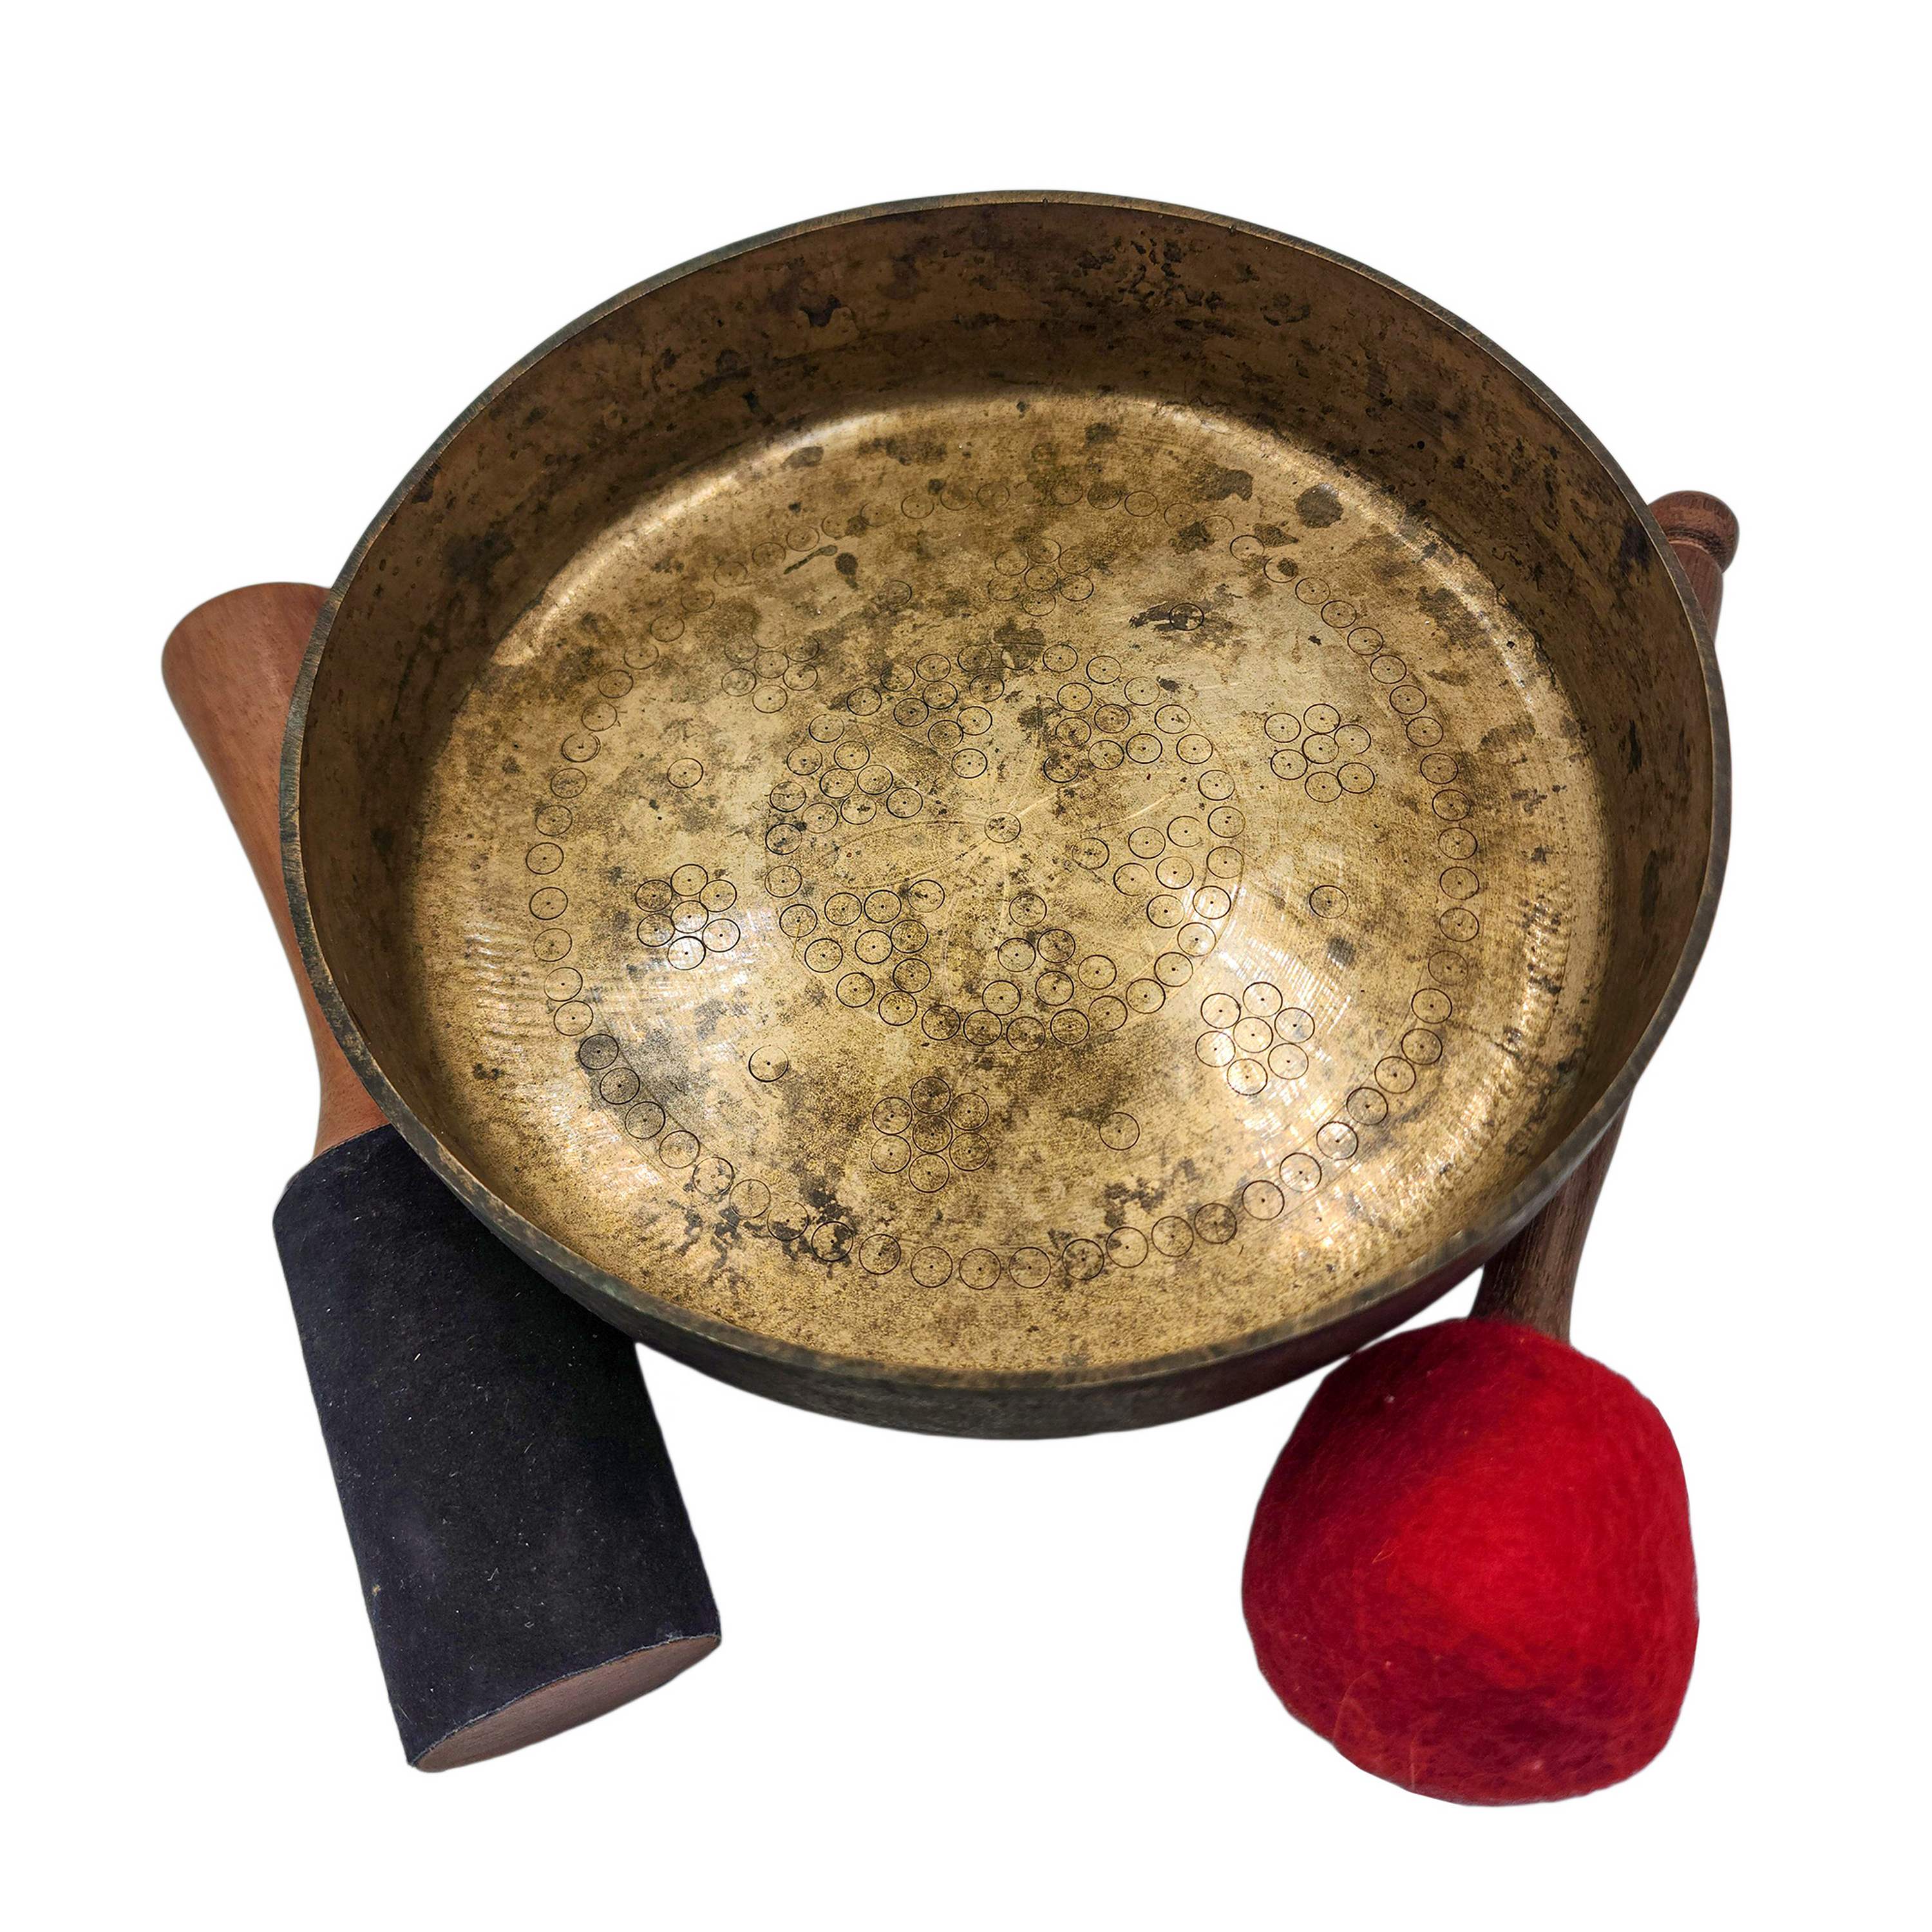 Manipuri Singing Bowl With Flower Of Life Inside The Bowl, Buddhist Hand Beaten, Antique Finishing